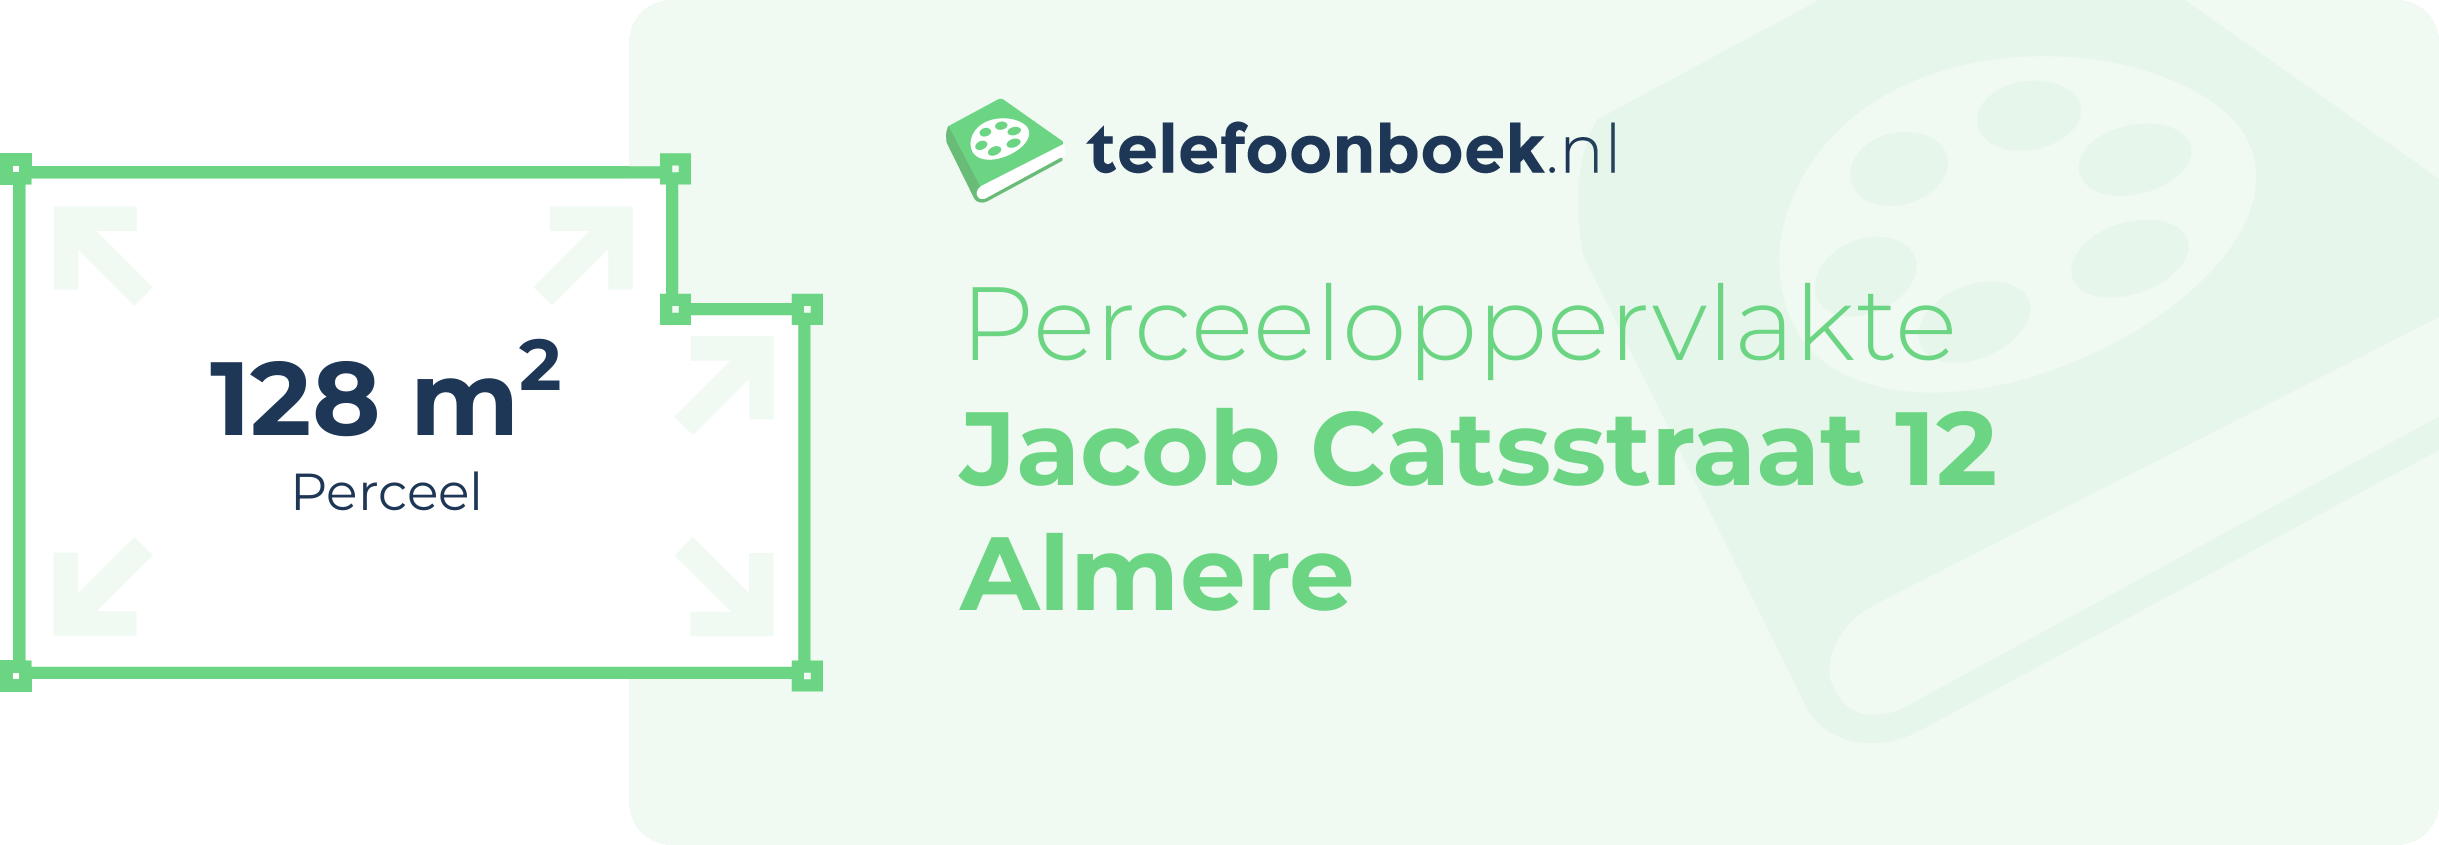 Perceeloppervlakte Jacob Catsstraat 12 Almere